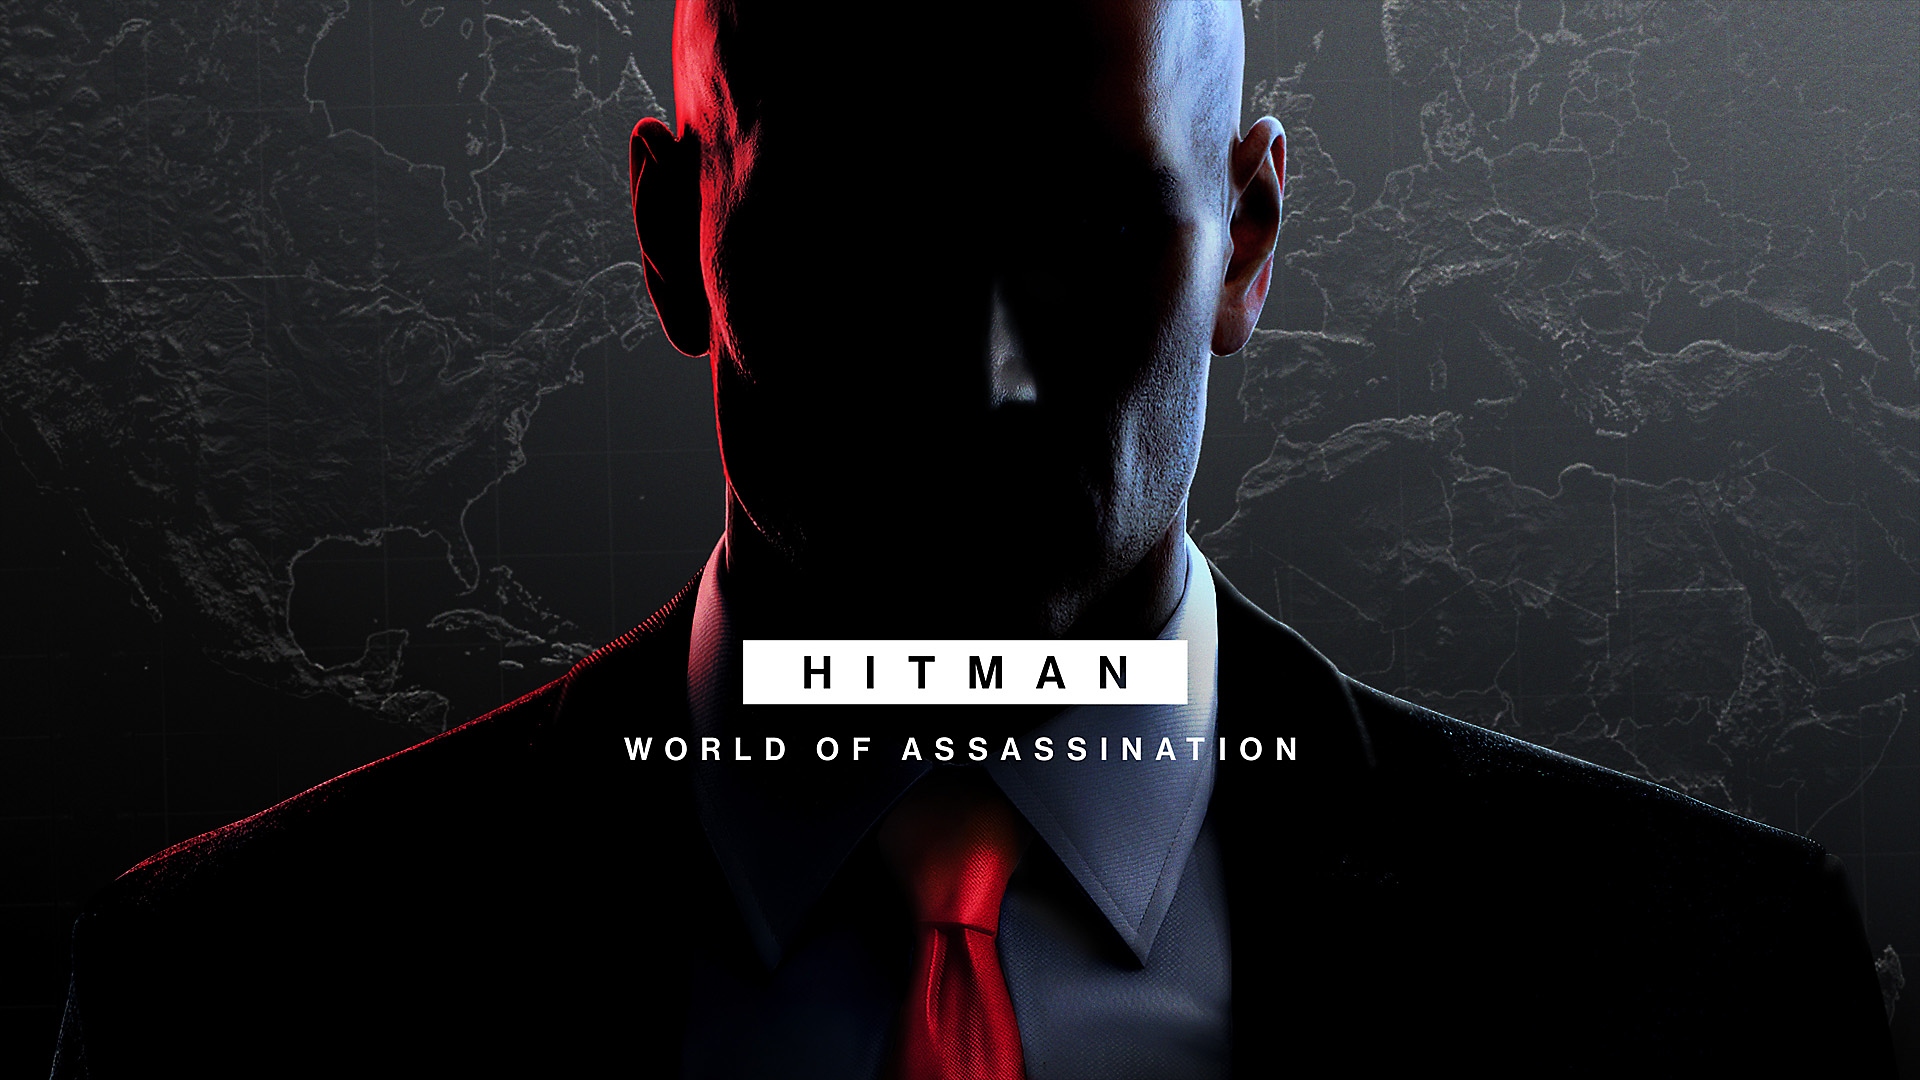 Hitman World of Assassination - Launch Trailer | PS5, PS4 & PSVR Games